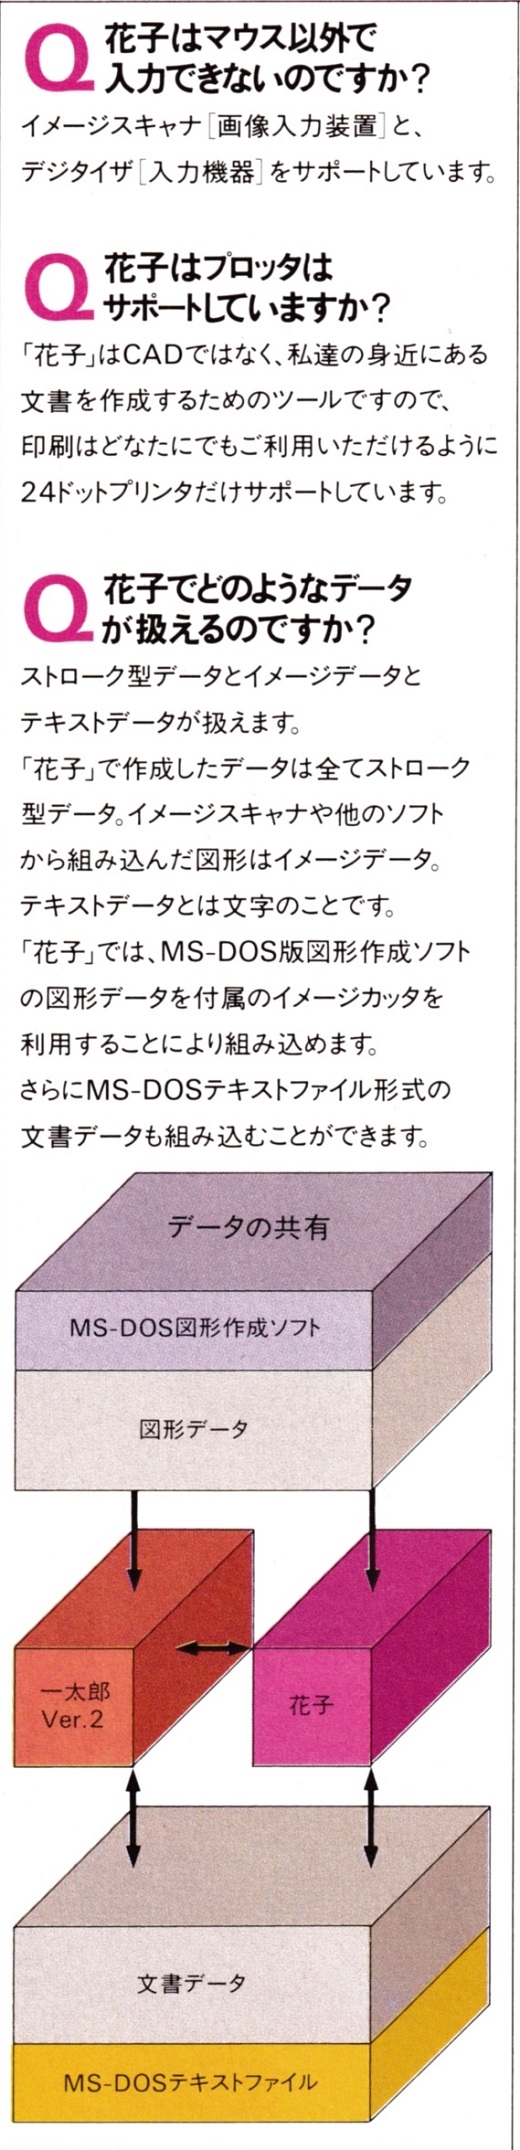 ASCII1987(04)a16花子説明02_W520.jpg